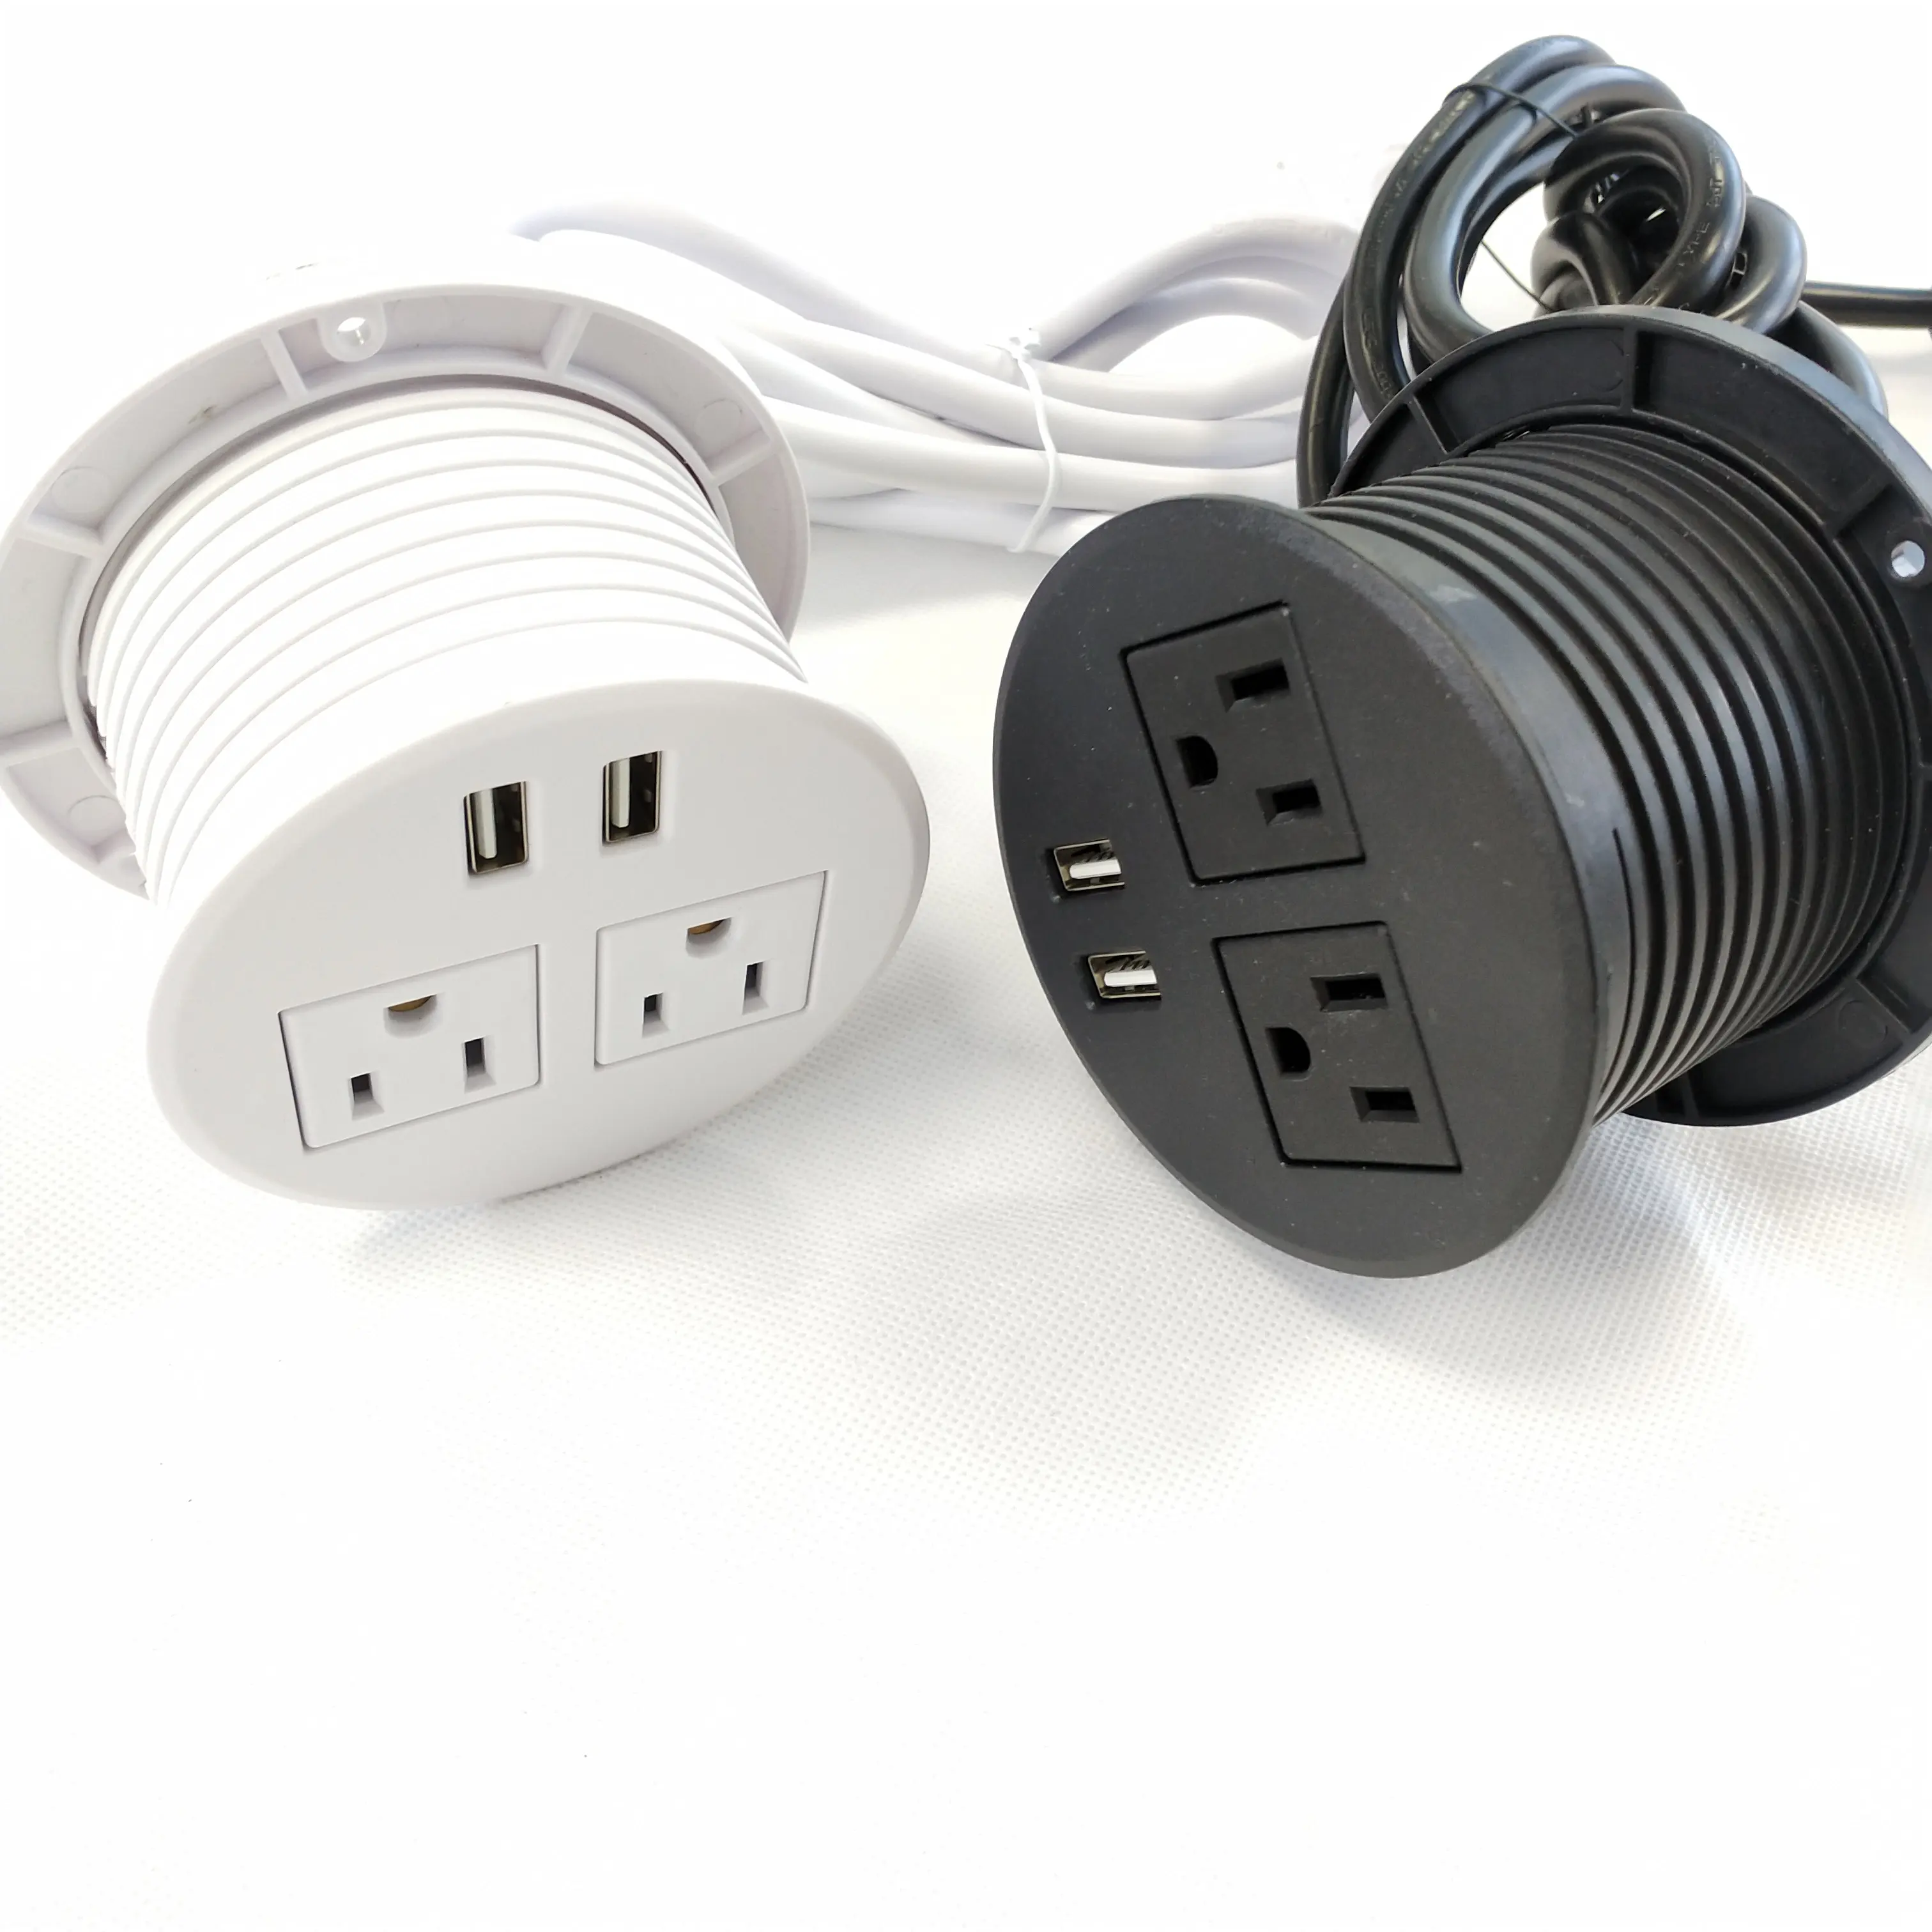 White black Stock US standard 80mm round grommet USB charging socket for office table power outlet